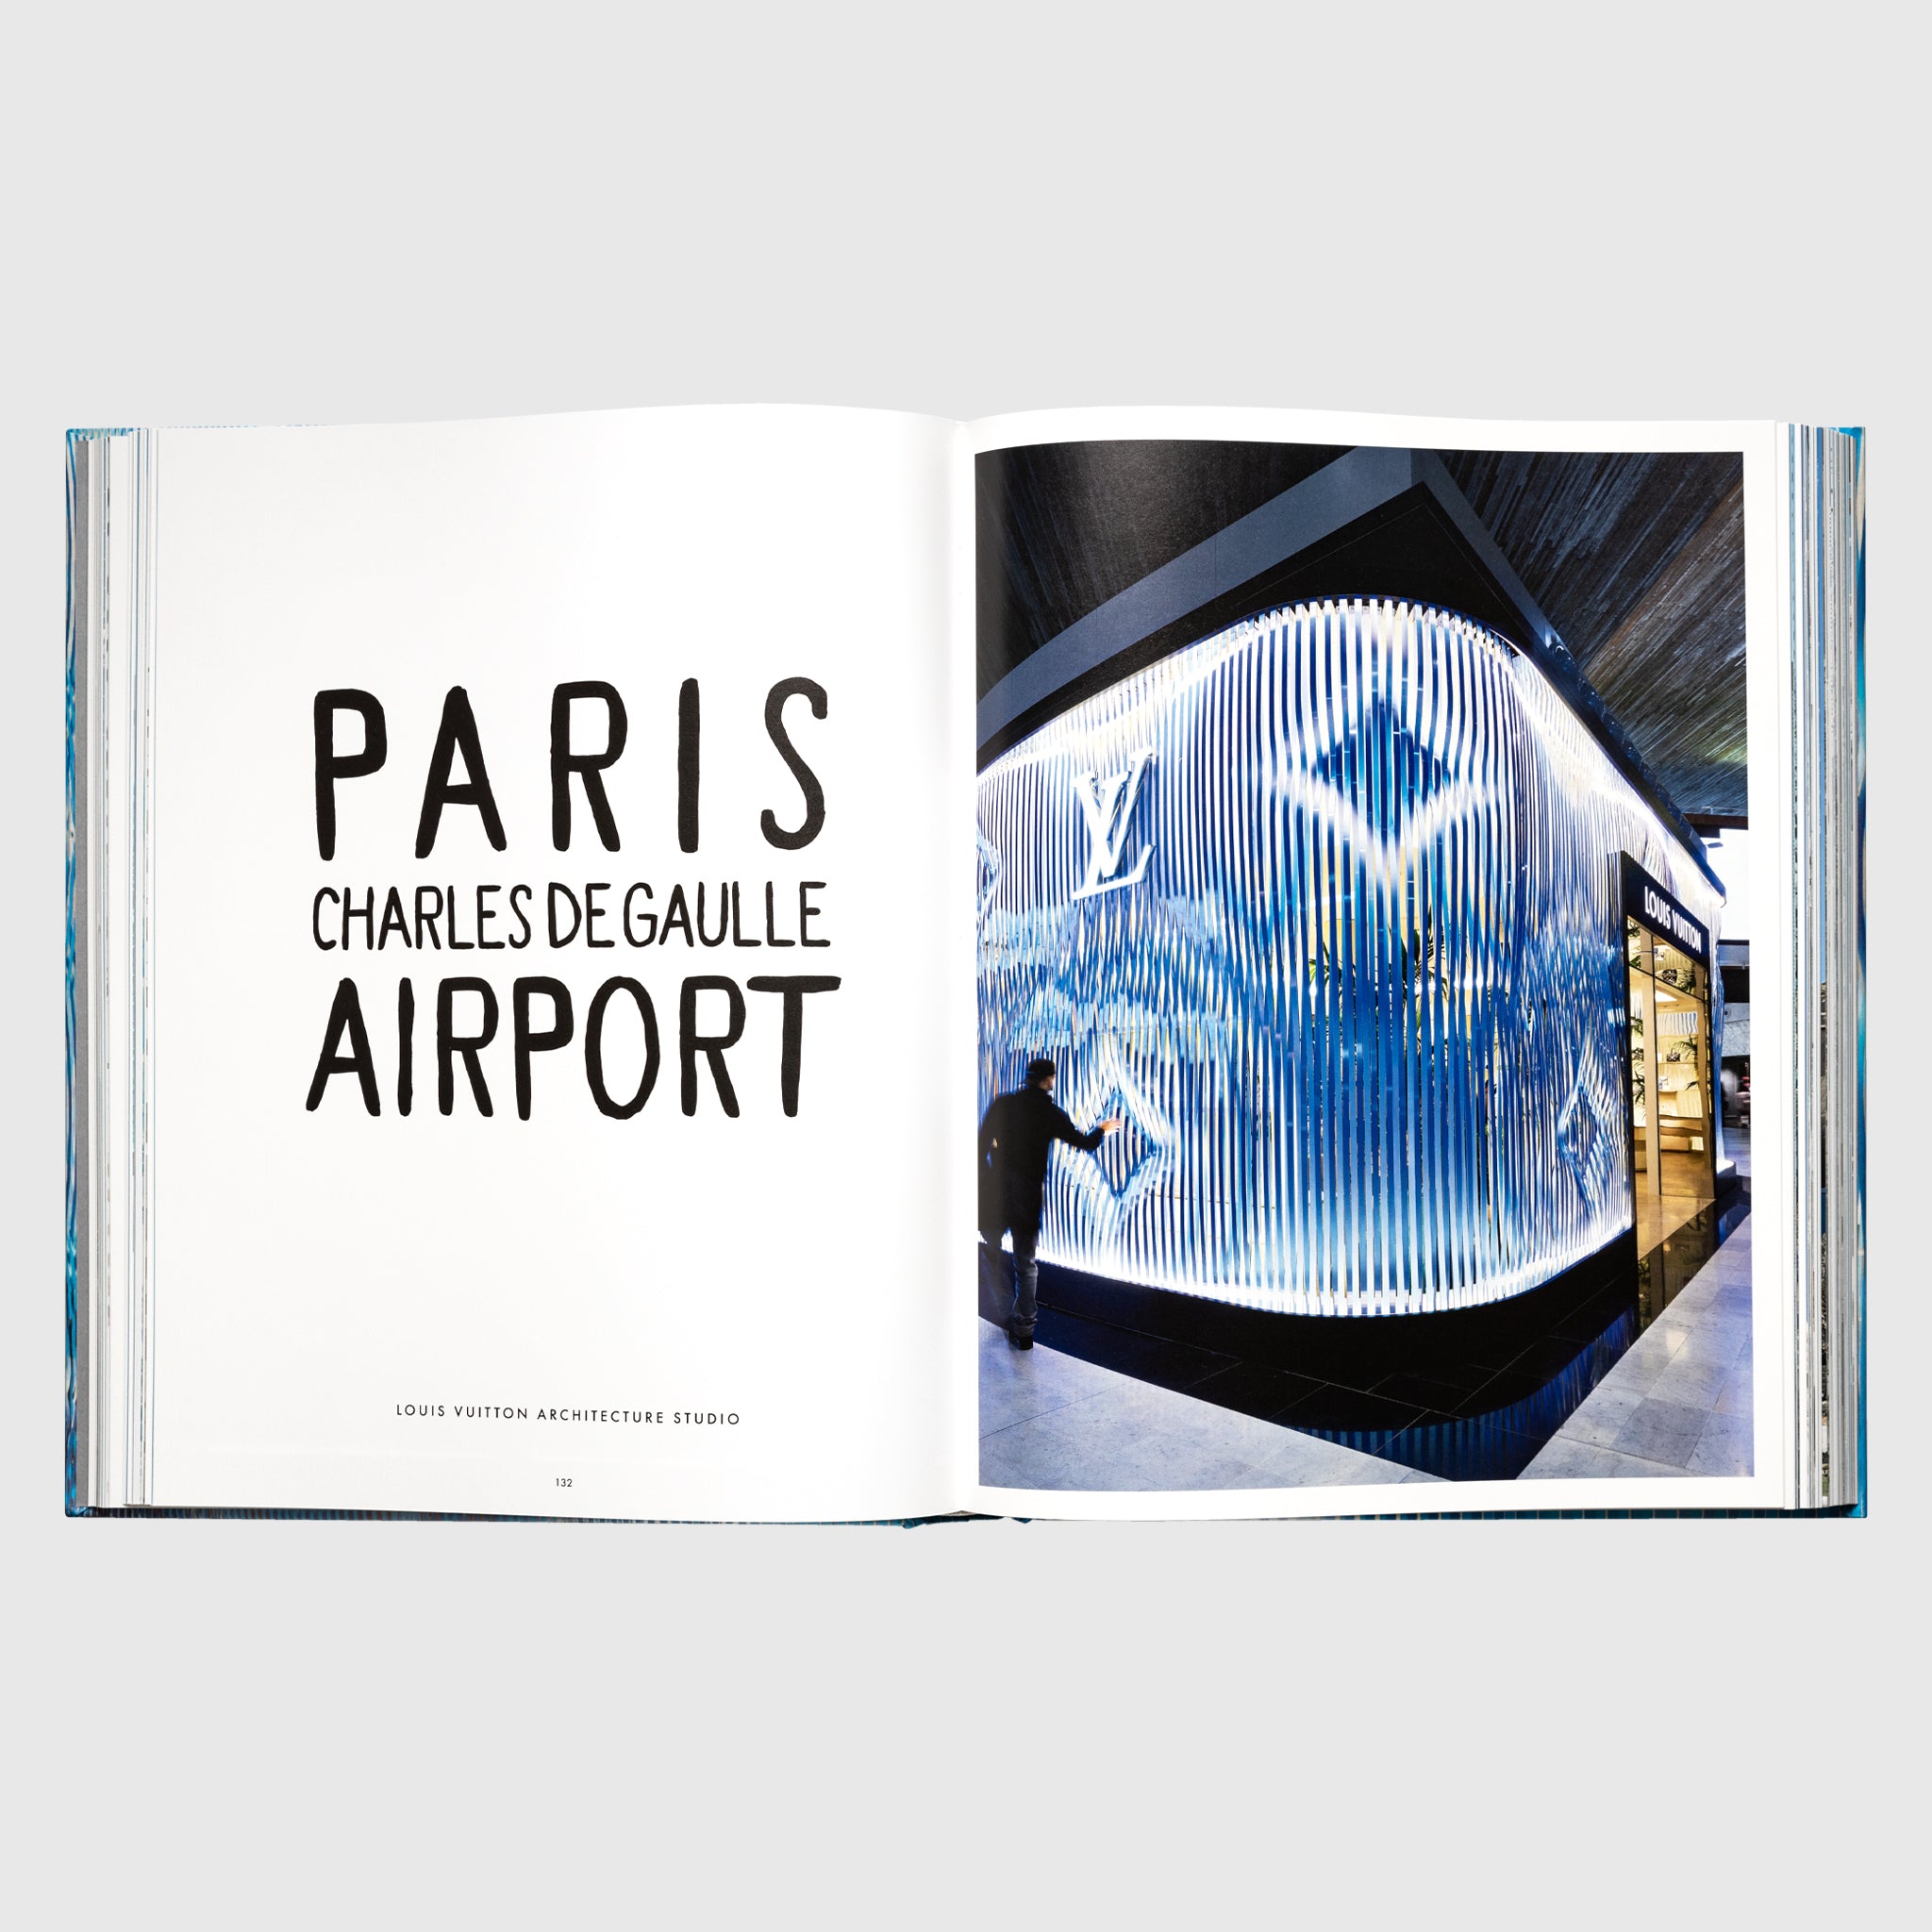 New Louis Vuitton 'Skin' Book Explores the Maison's Architectural